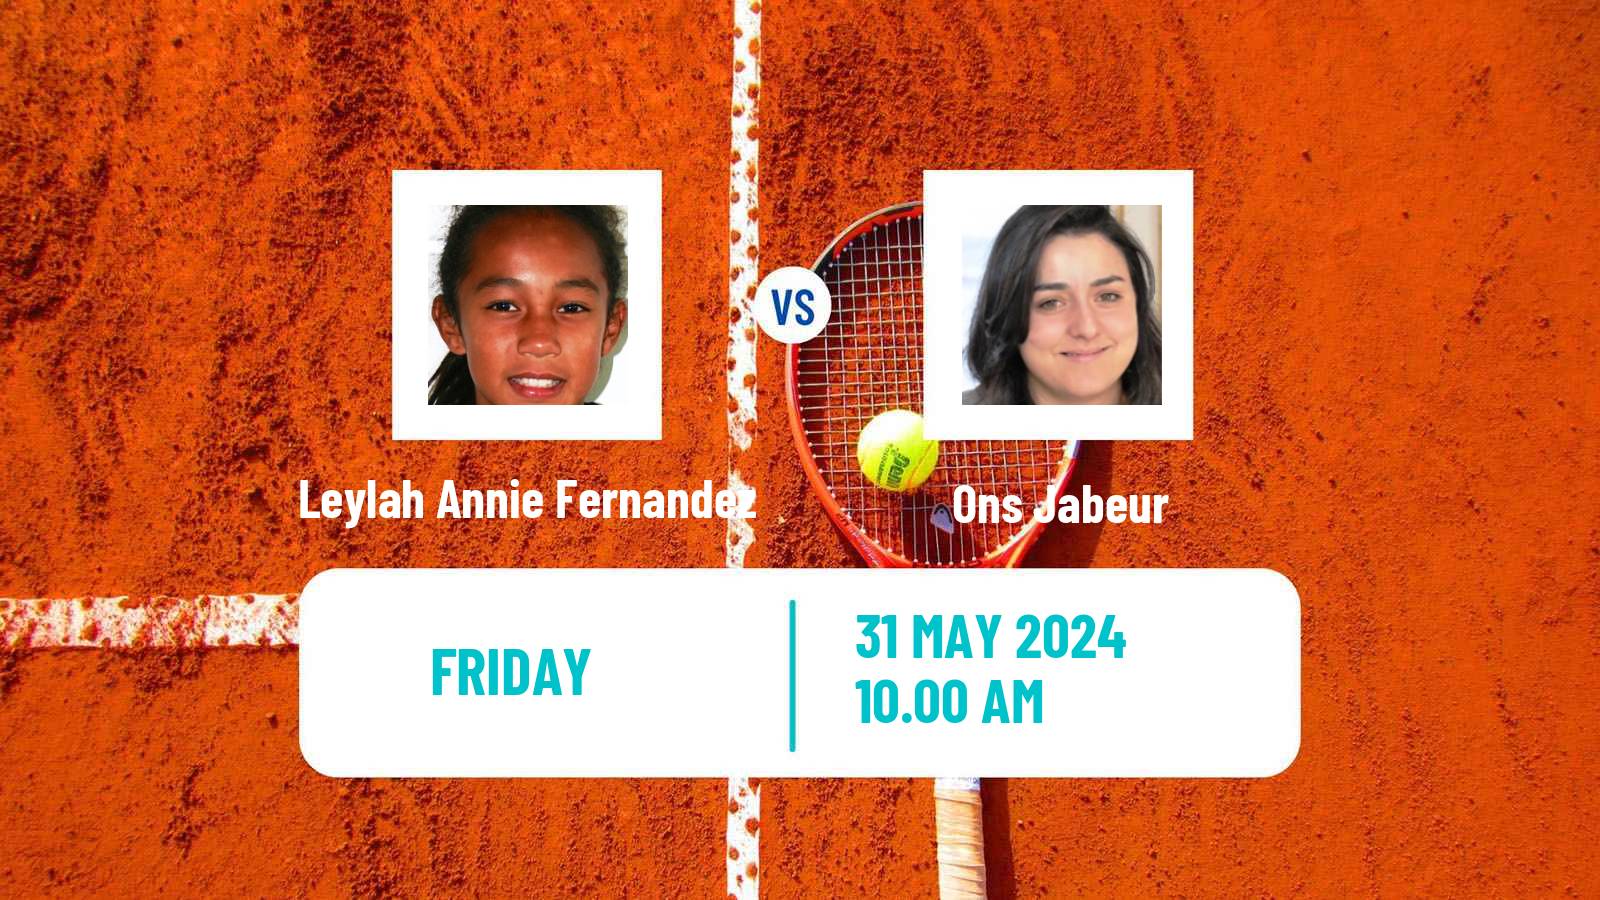 Tennis WTA Roland Garros Leylah Annie Fernandez - Ons Jabeur